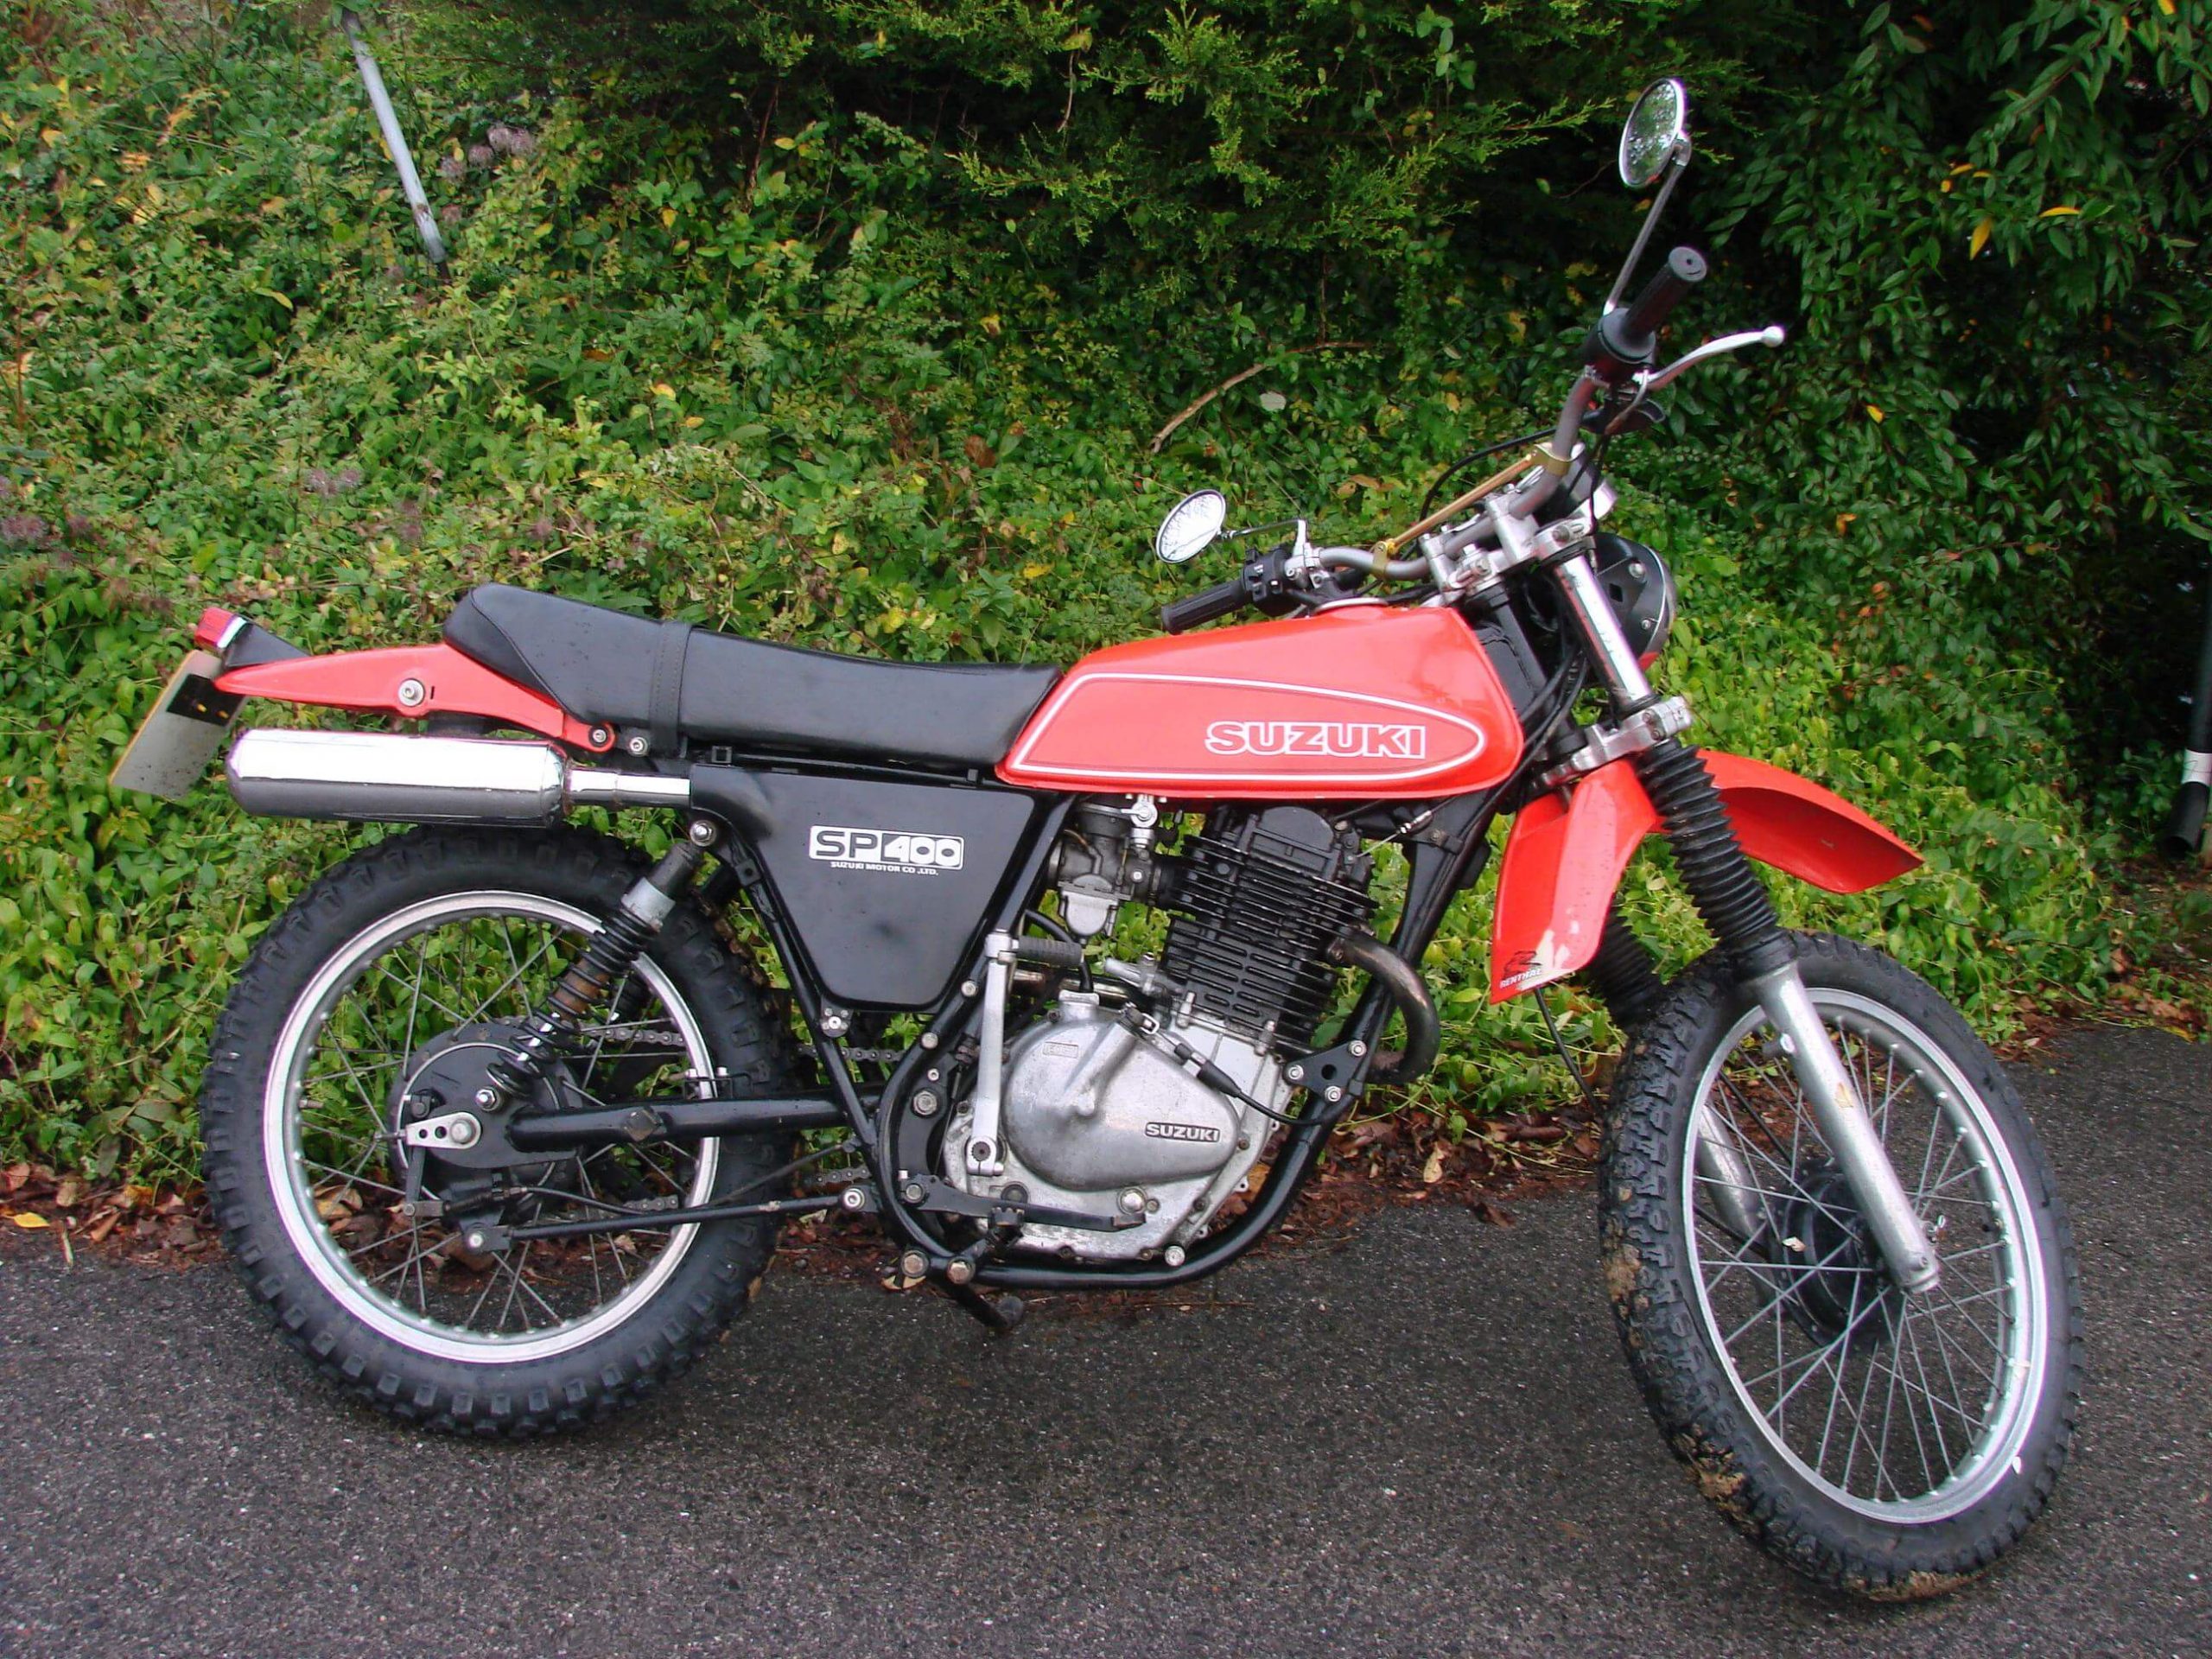 SUZUKI SP 400 - BOL D'OR MOTORCYCLES